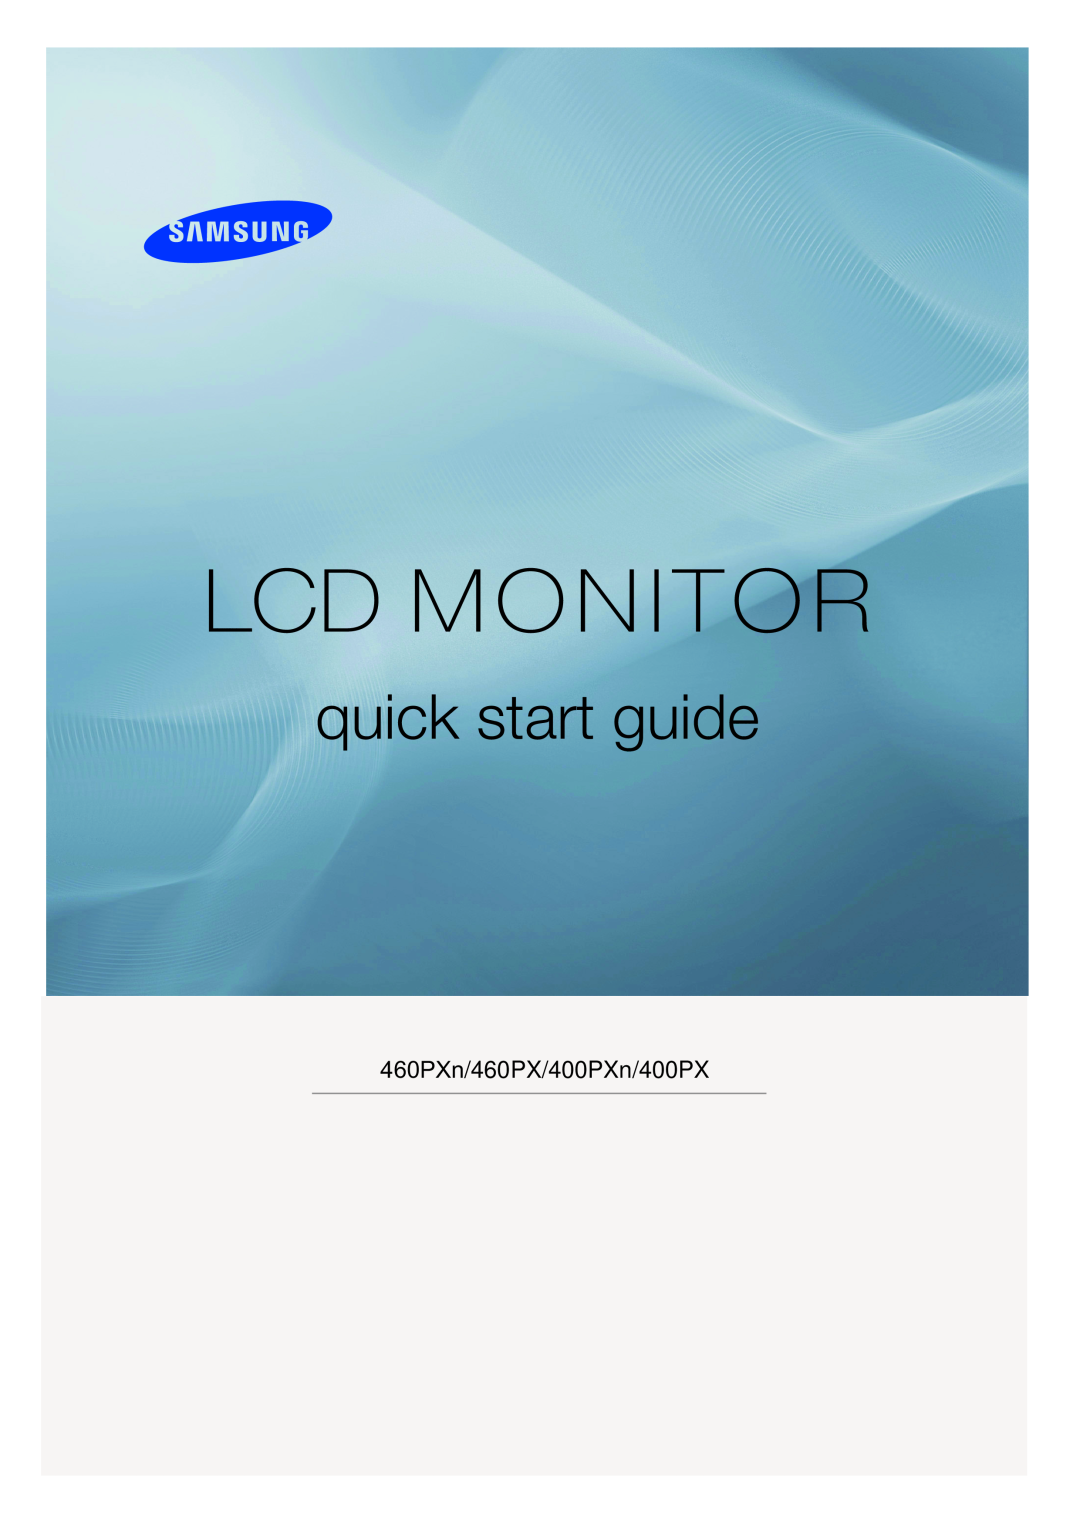 Samsung LS46BHYNBF/EDC, LS46BHTNBF/EDC, LS46BHPNS/EDC manual Lcd Monitor, quick start guide, 460PXn/460PX/400PXn/400PX 